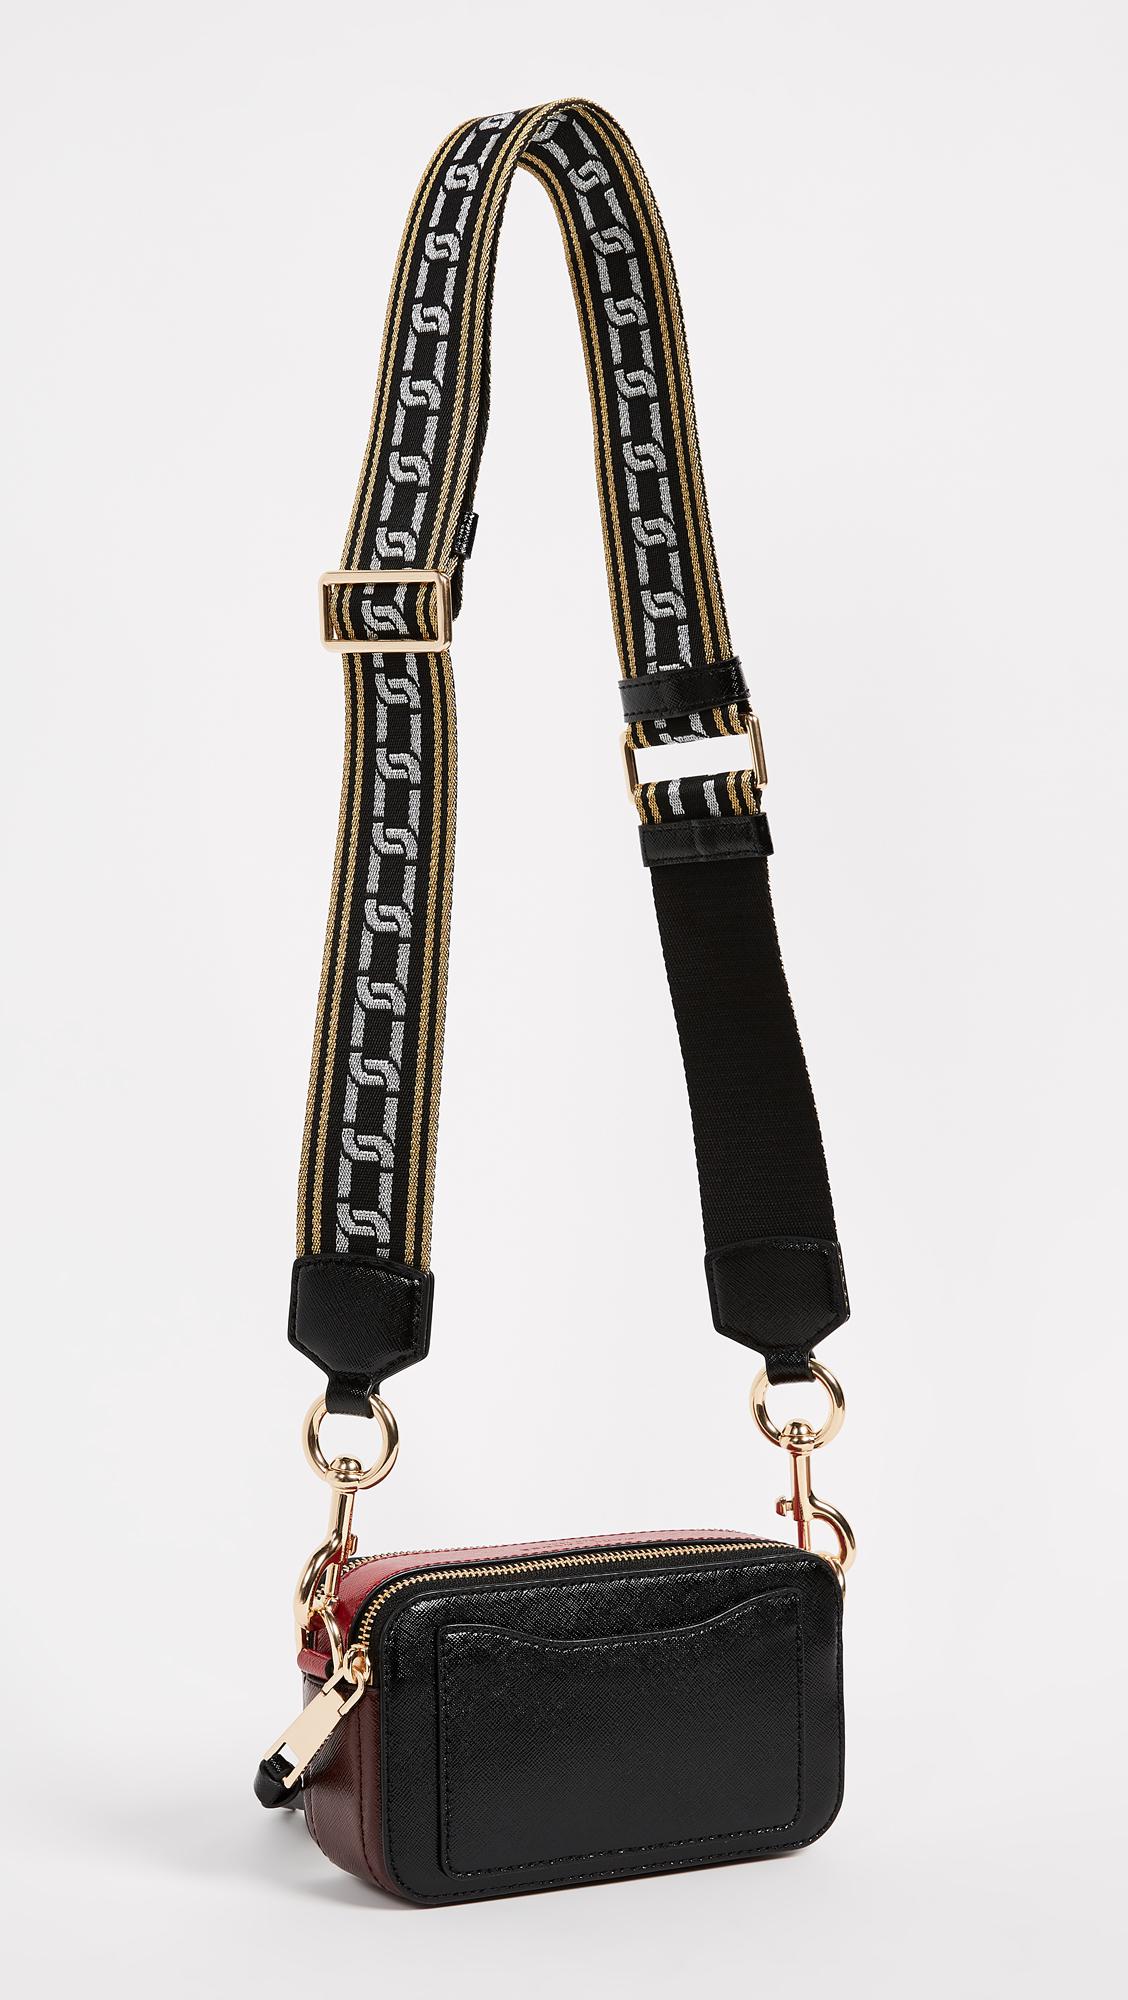 Marc Jacobs Black Leather Crossbody Handbags Paul Smith